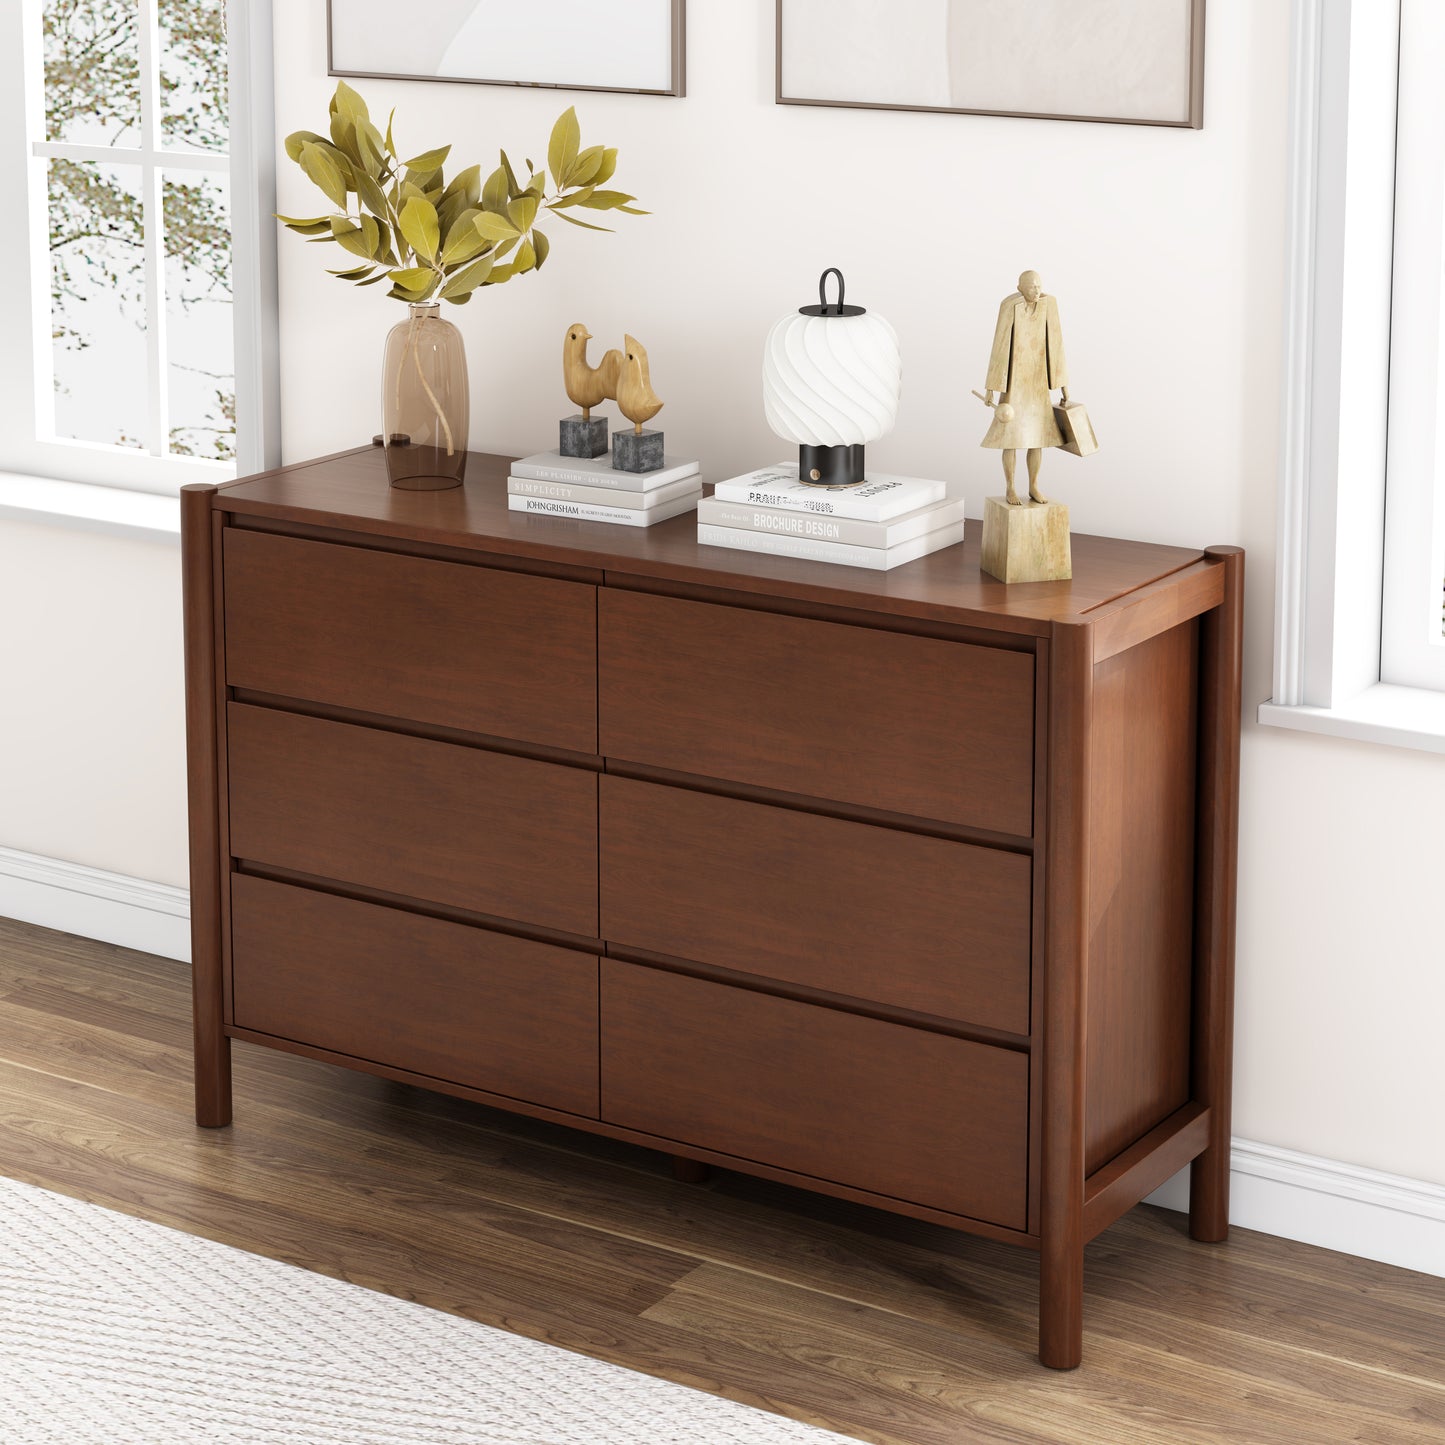 Mid Century Modern Wood 6-Drawer Dresser Storage Cabinet for Bedroom, Living Room, Rich Walnut